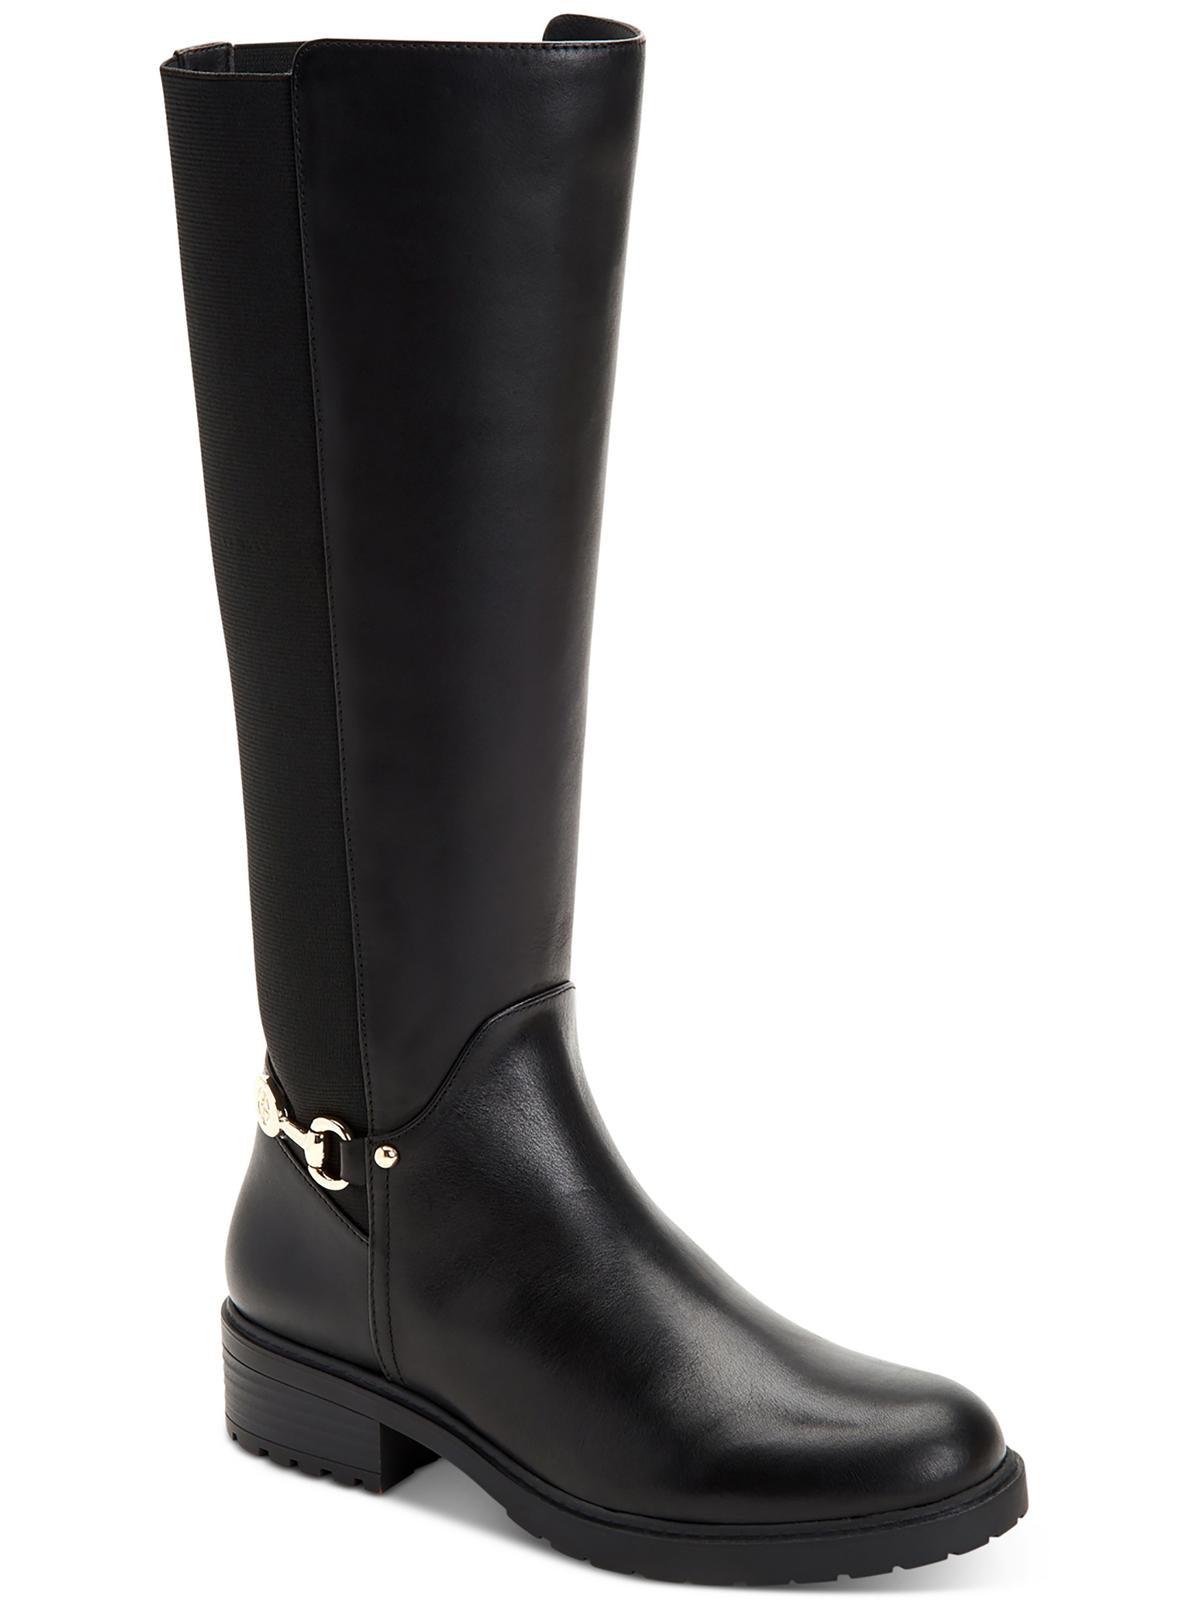 Giani Bernini Barnibee Leather Riding Knee-high Boots in Black | Lyst